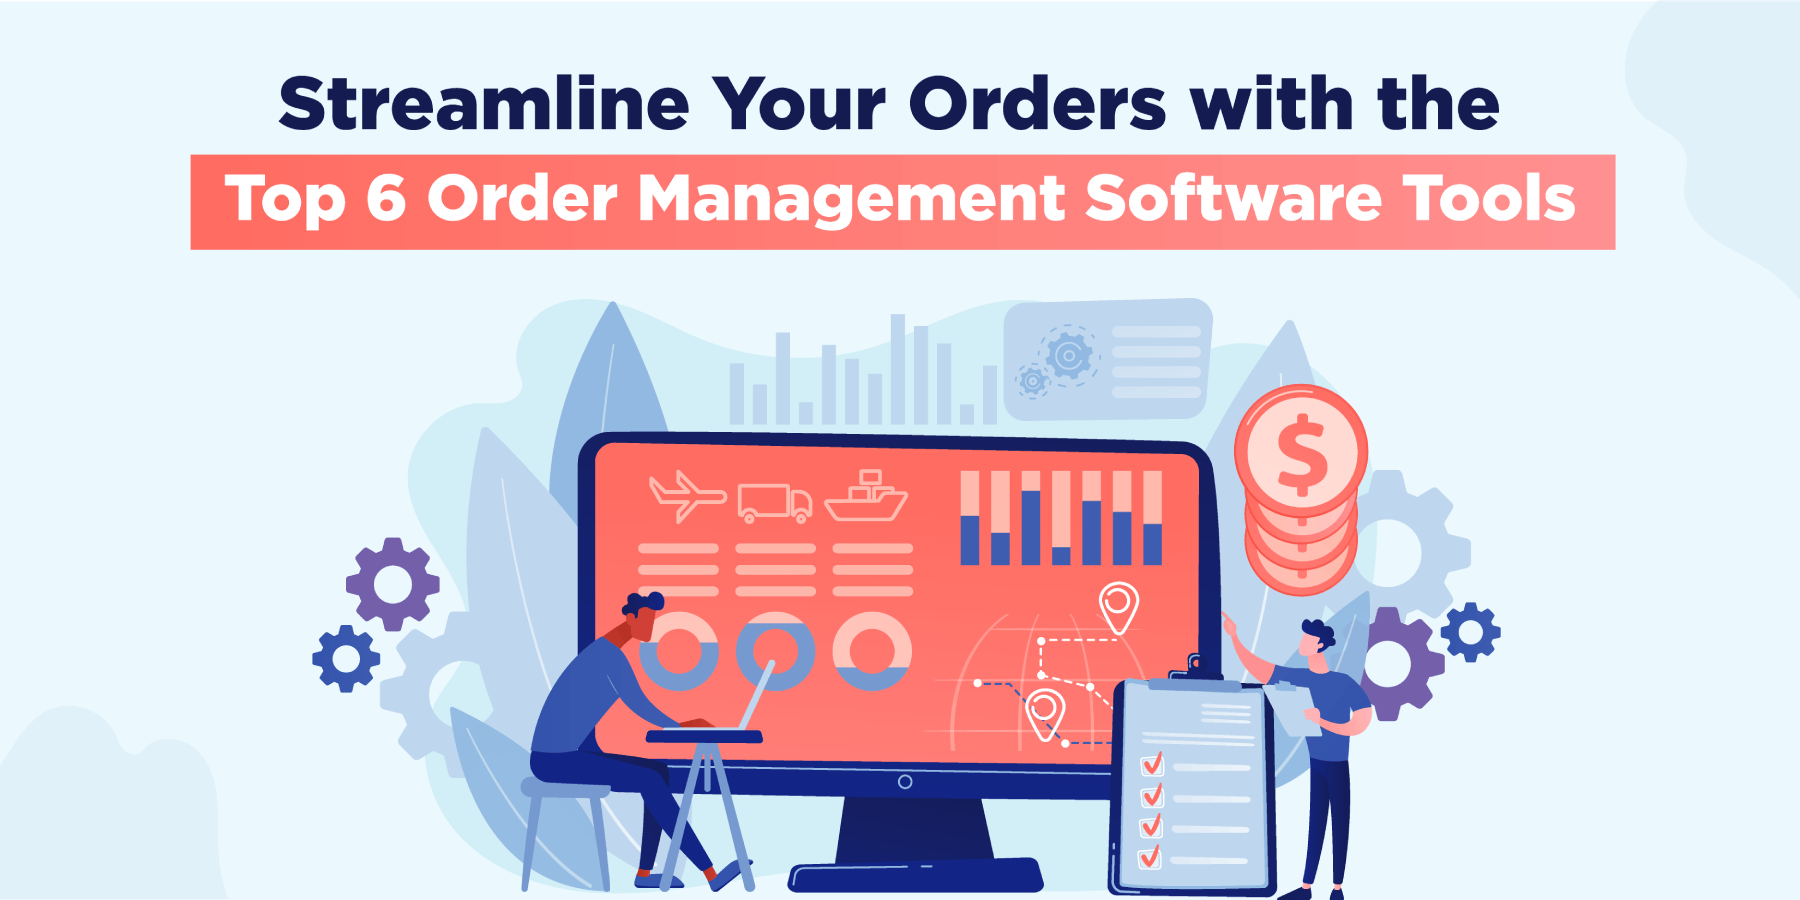 Order Processing Management